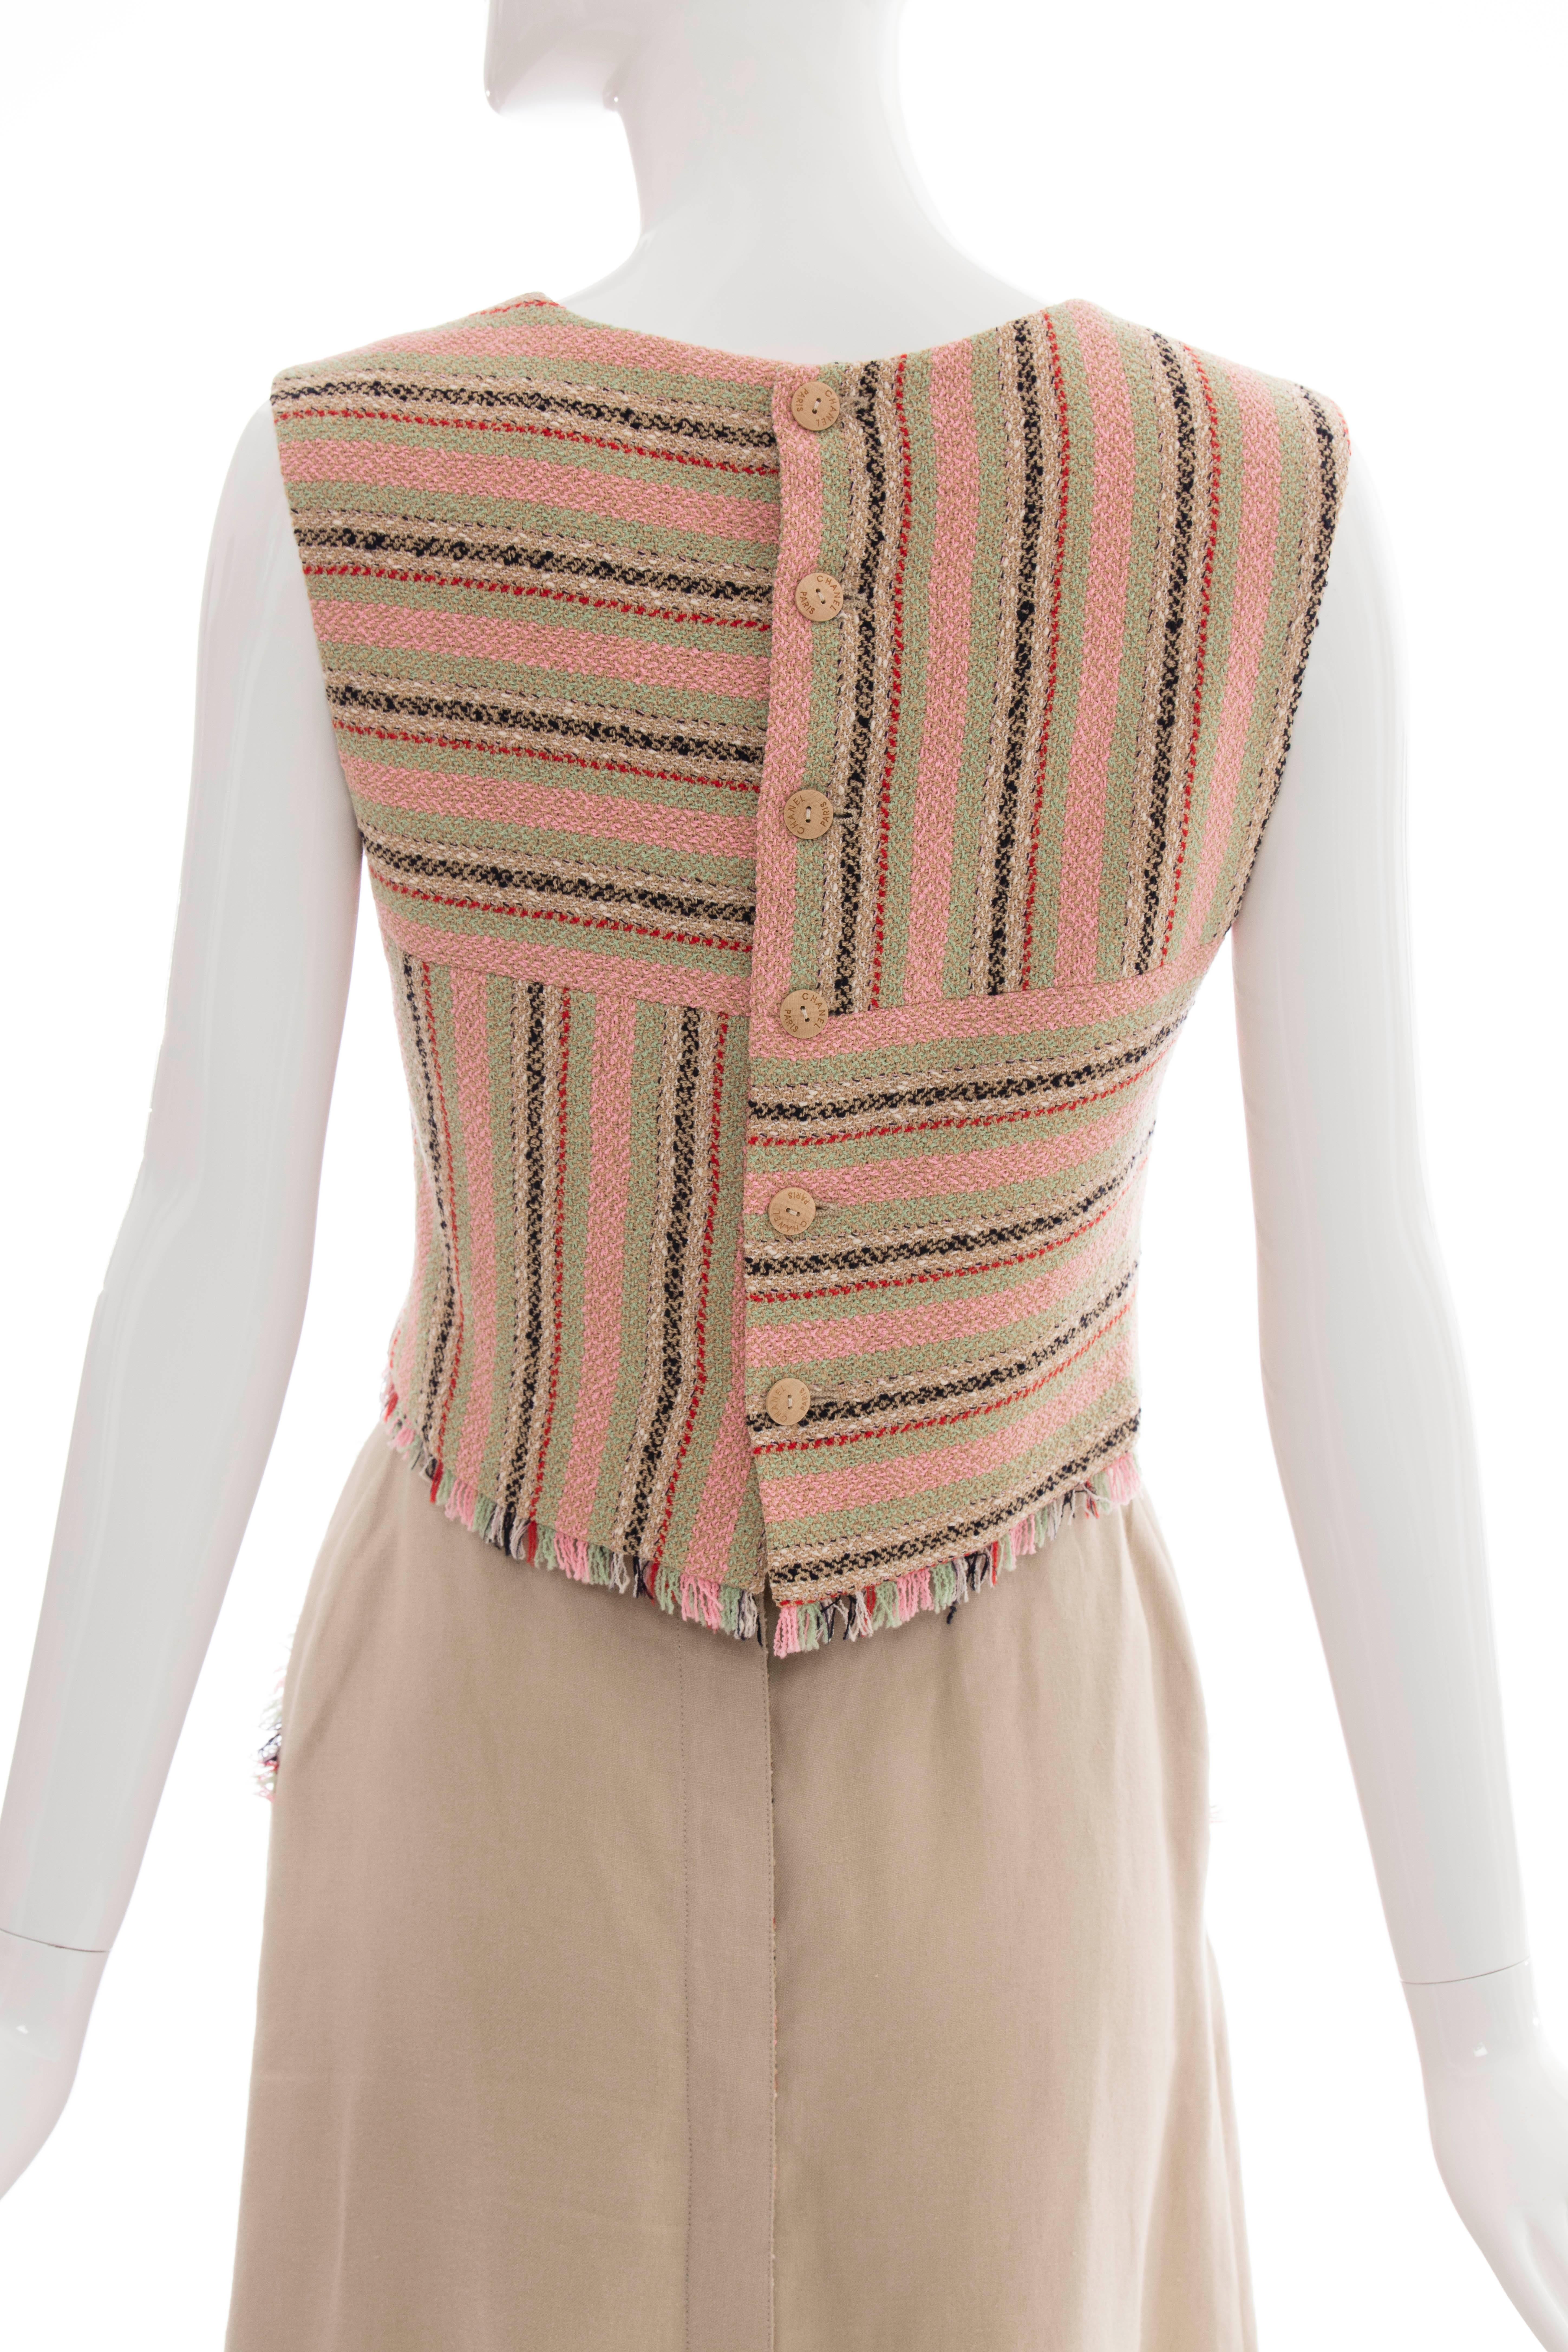 Chanel Three Piece Linen Skirt Suit, Resort 2000 For Sale 4